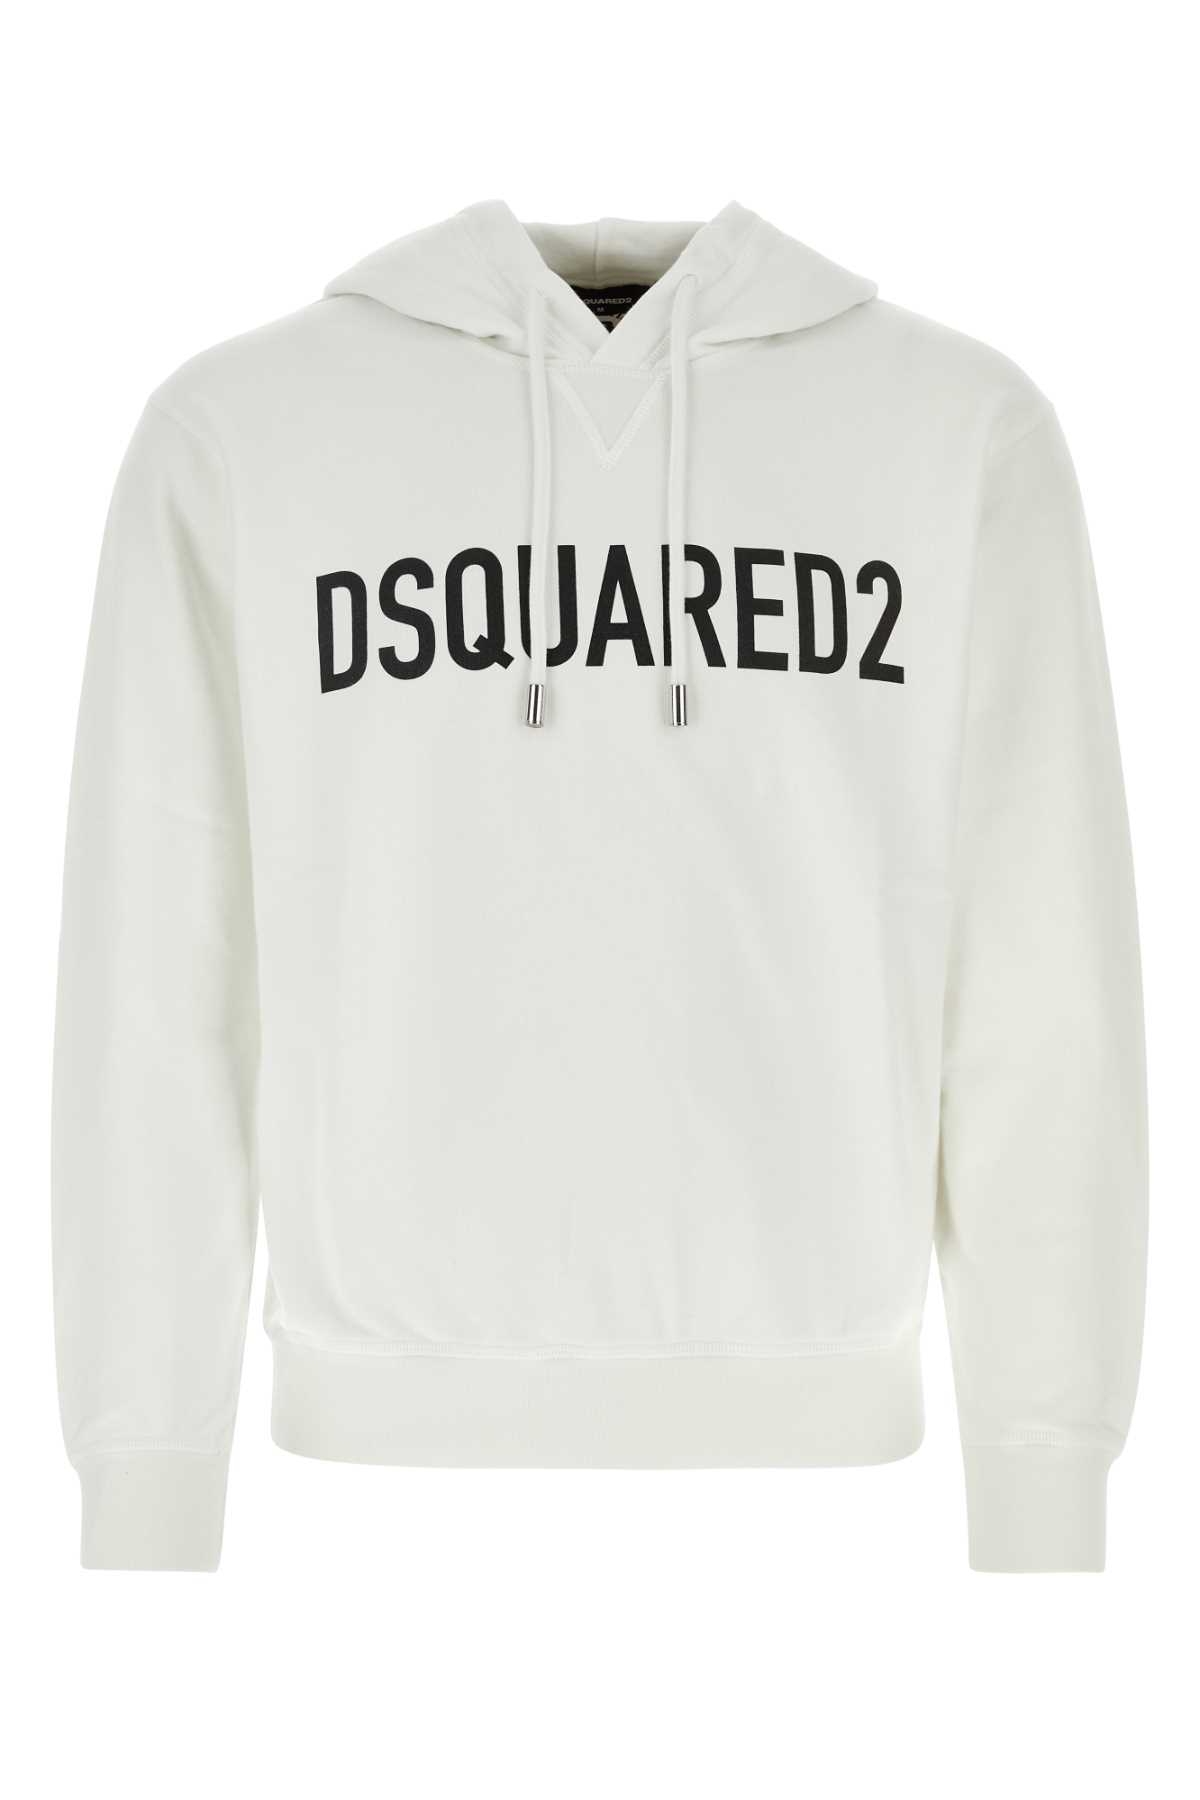 Dsquared2 White Cotton Sweatshirt In Neutral